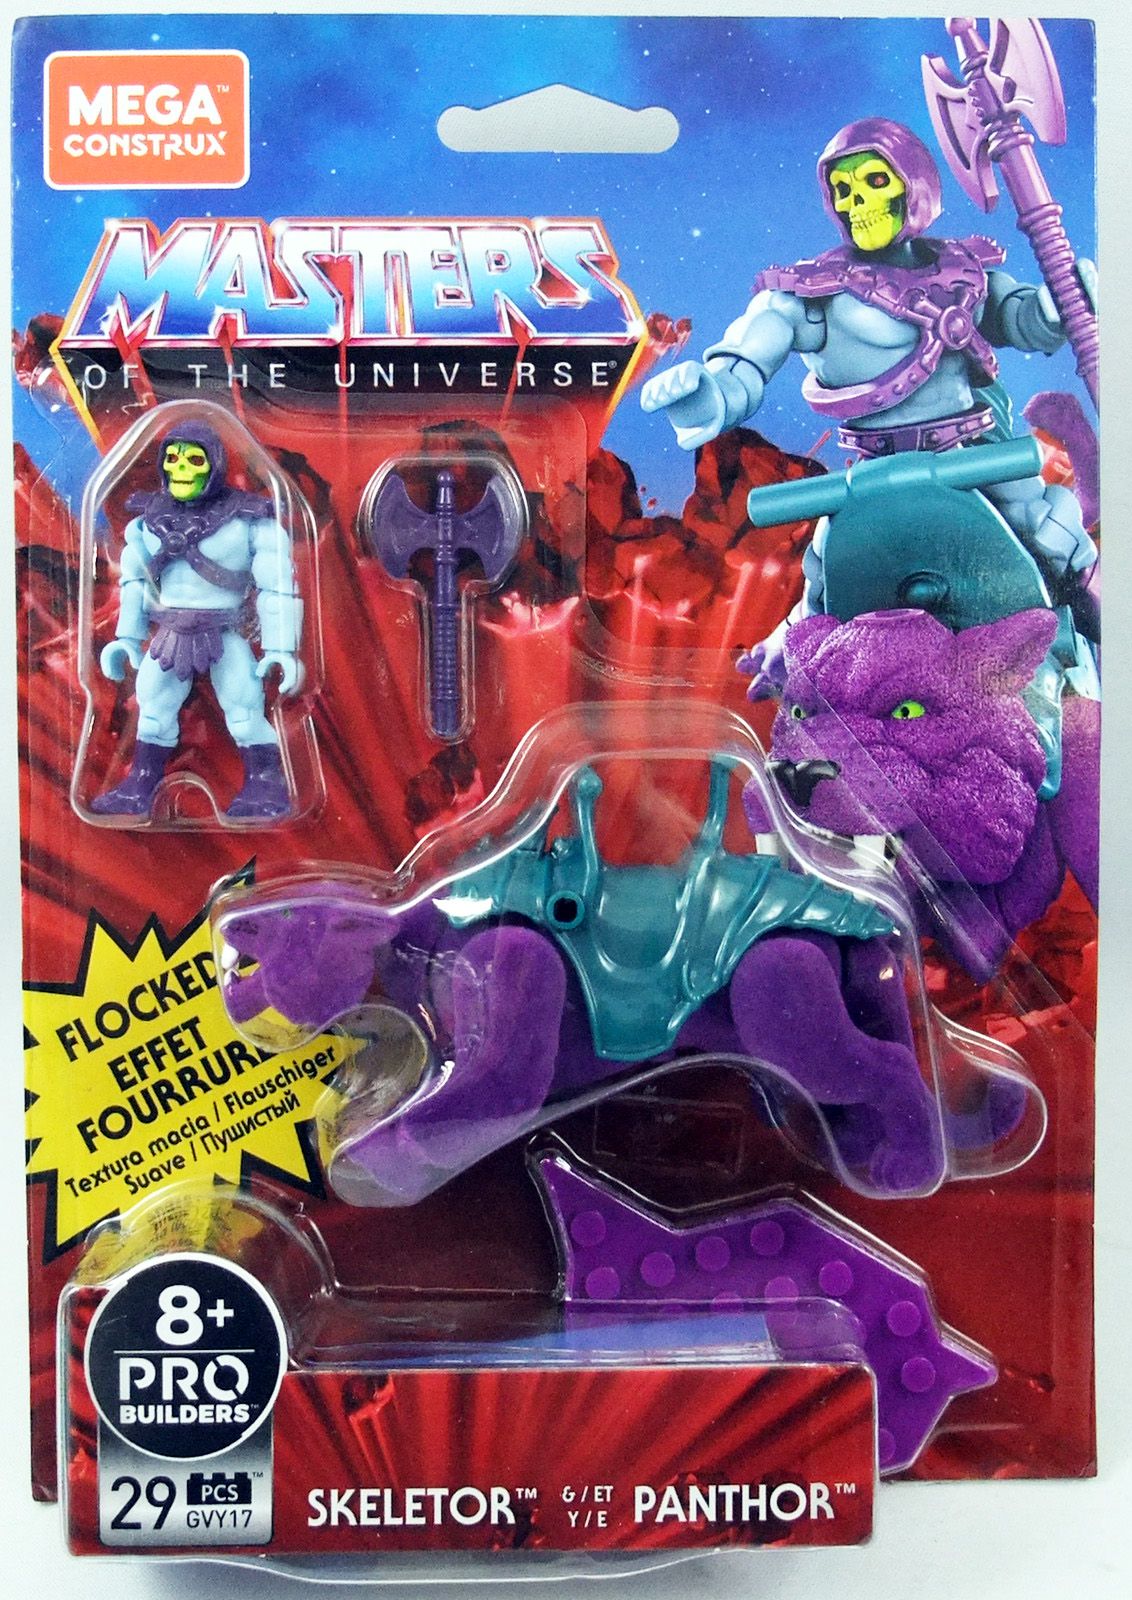 Mattel GVY17 Mega Construx Masters of the Universe Skeletor und Panthor 